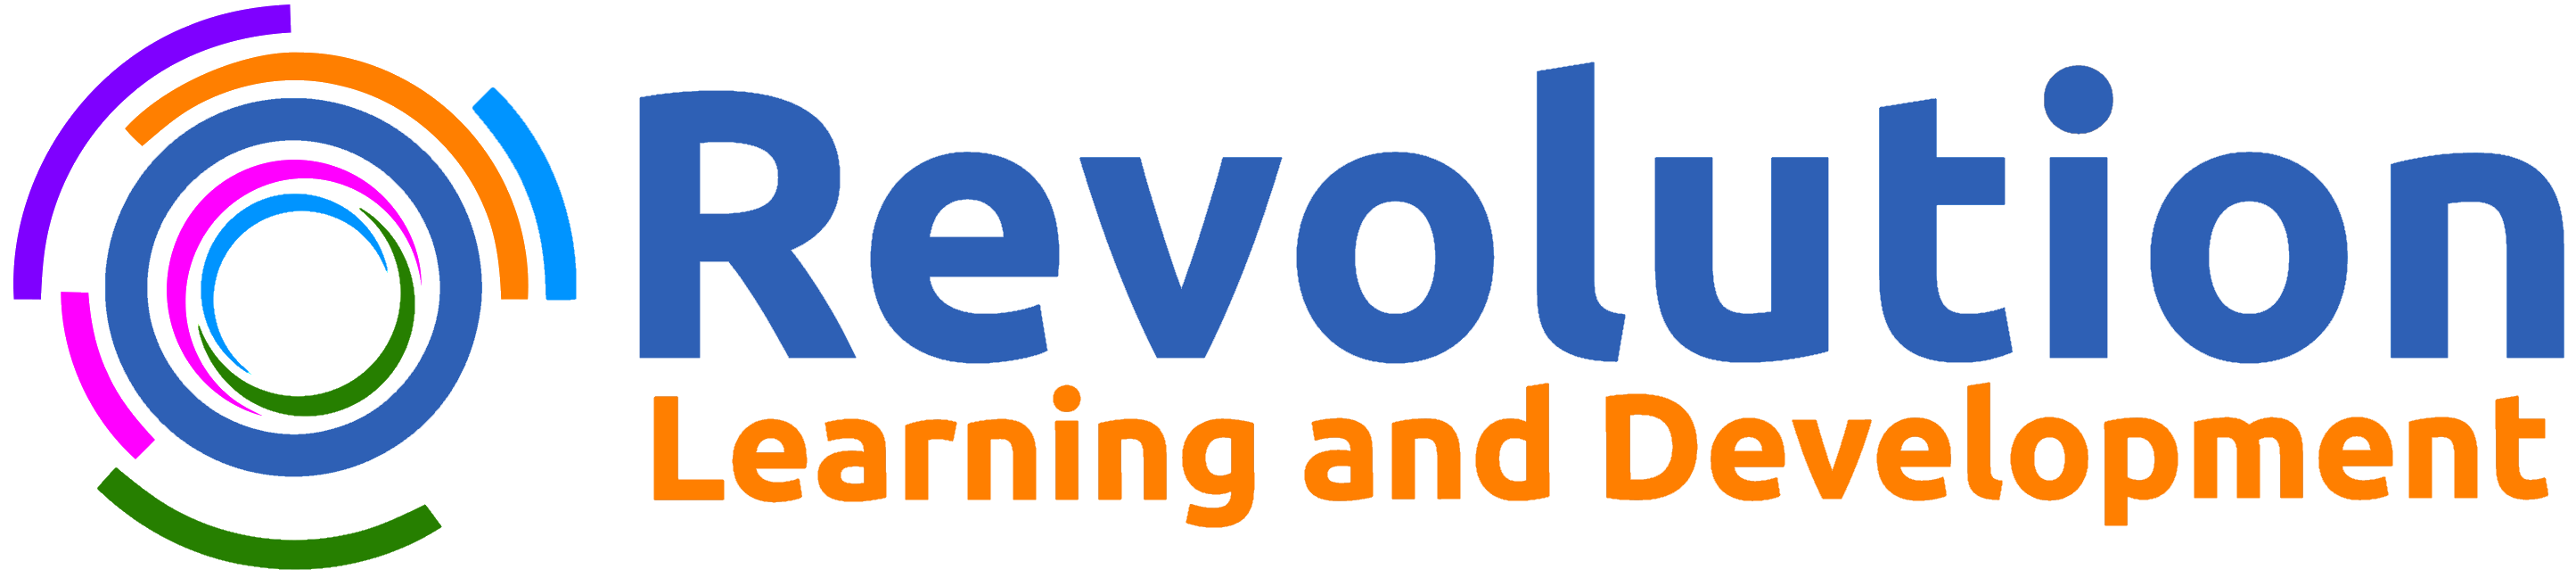 Revolution Learning and Development – Estonia